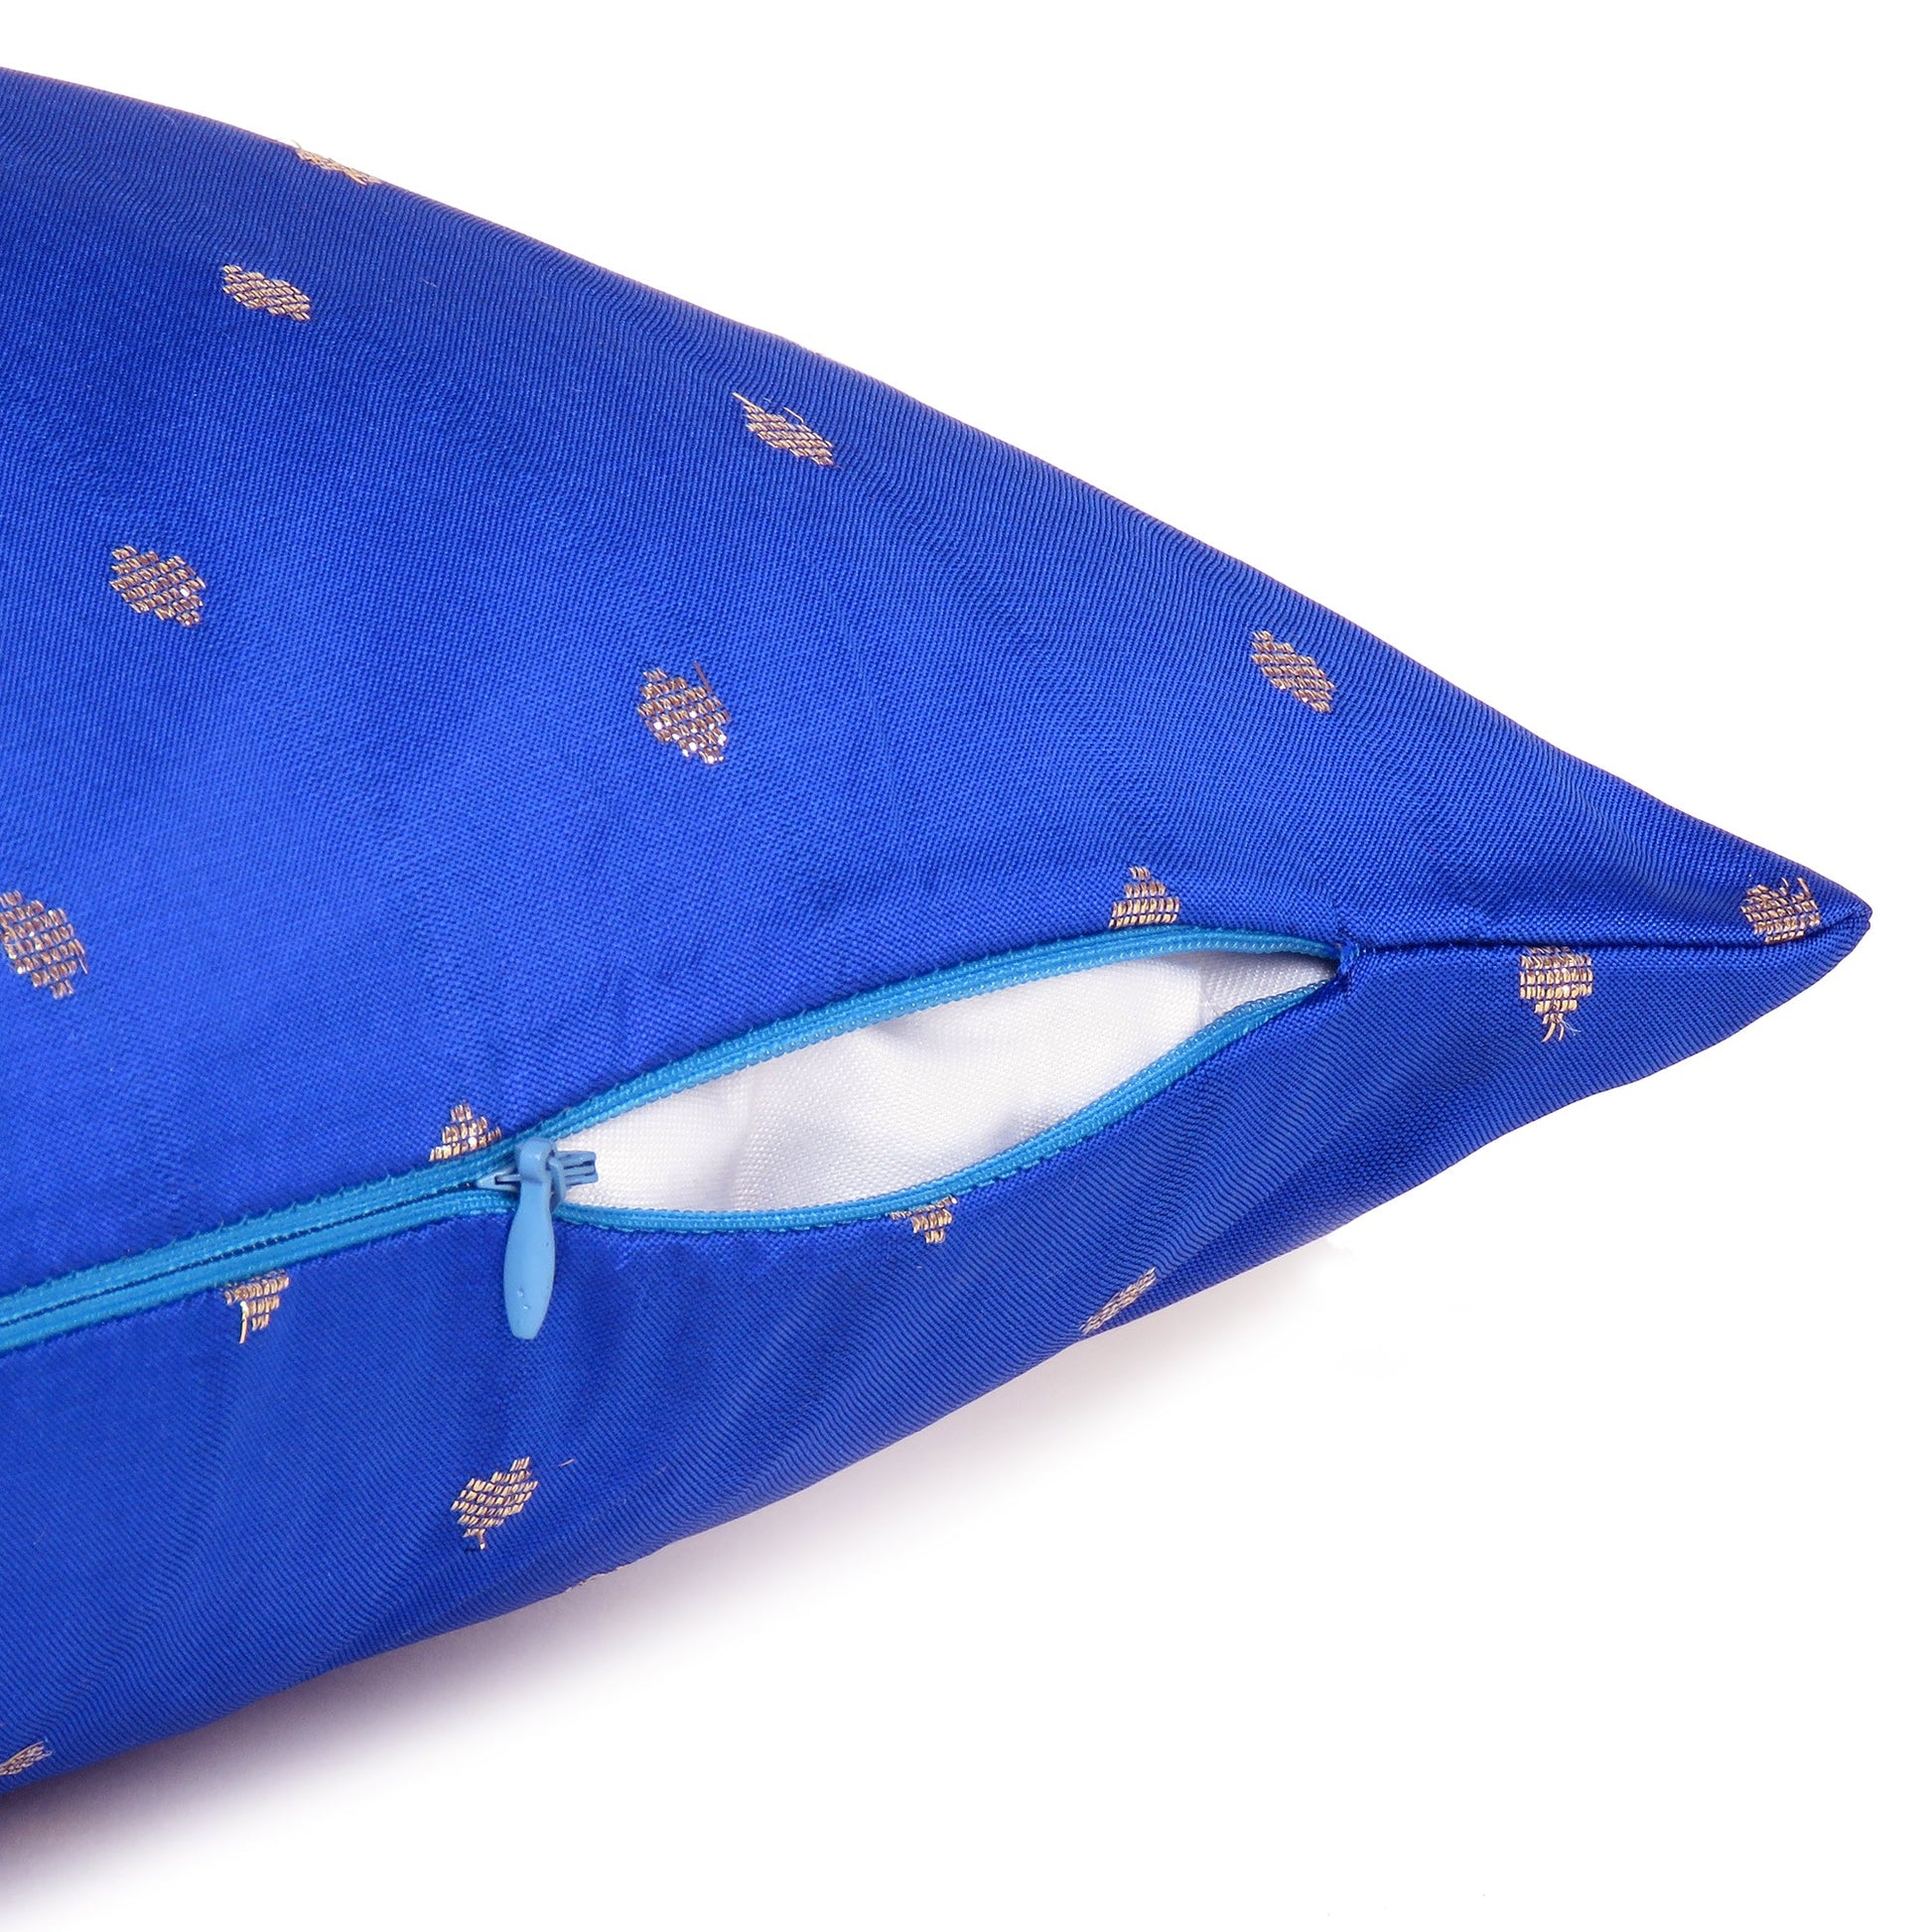 Art Silk Polka Dot Cushion Cover in Set of 2 - Royal Blue